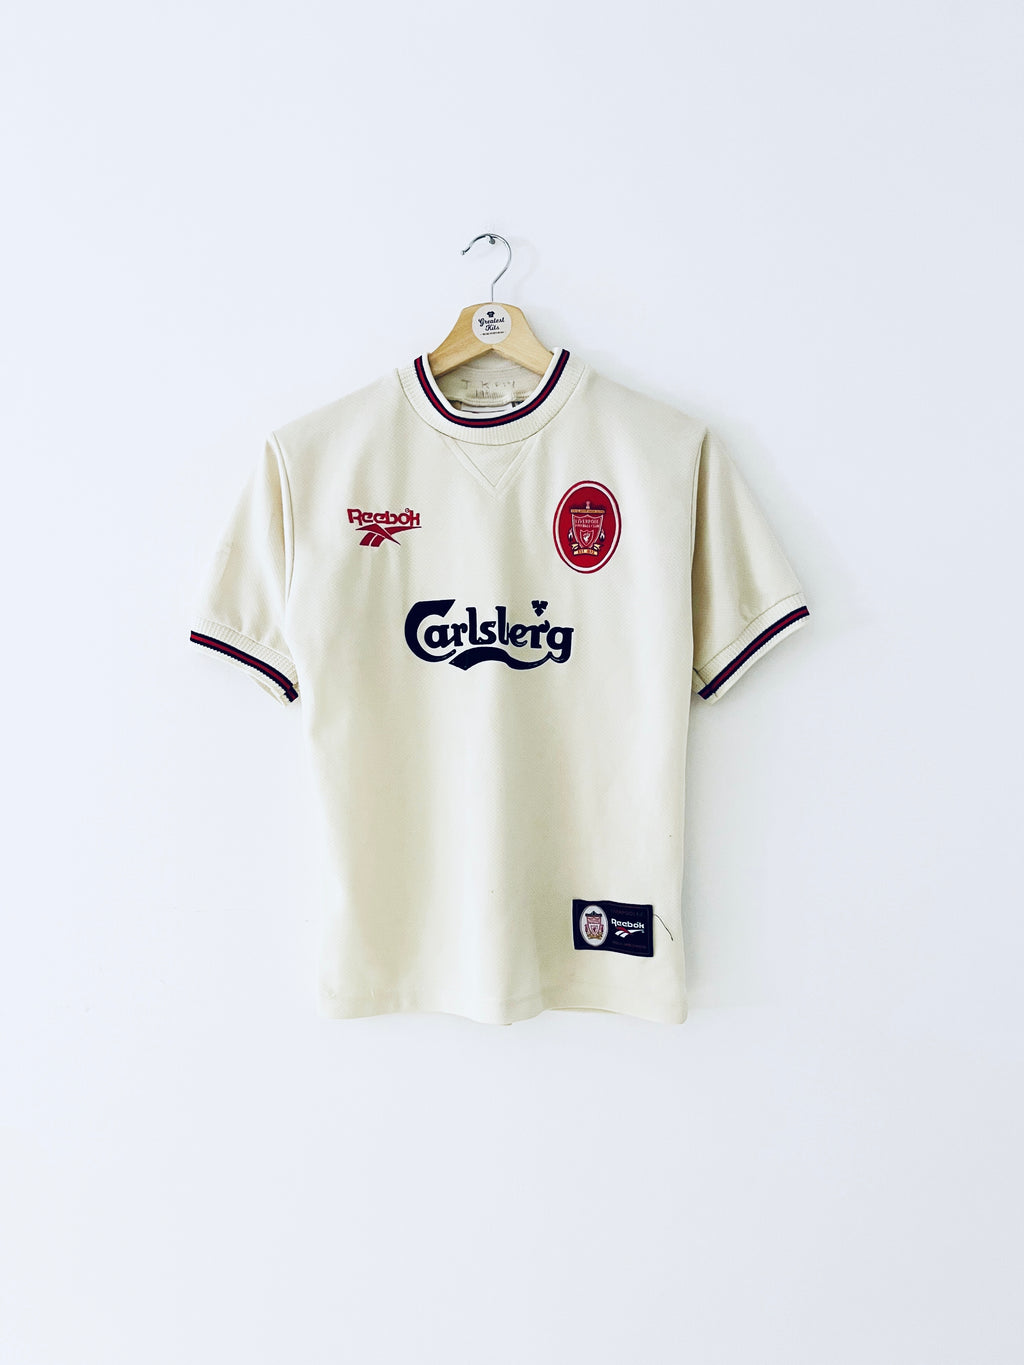 1996/97 Liverpool Away Shirt (Y) 8/10